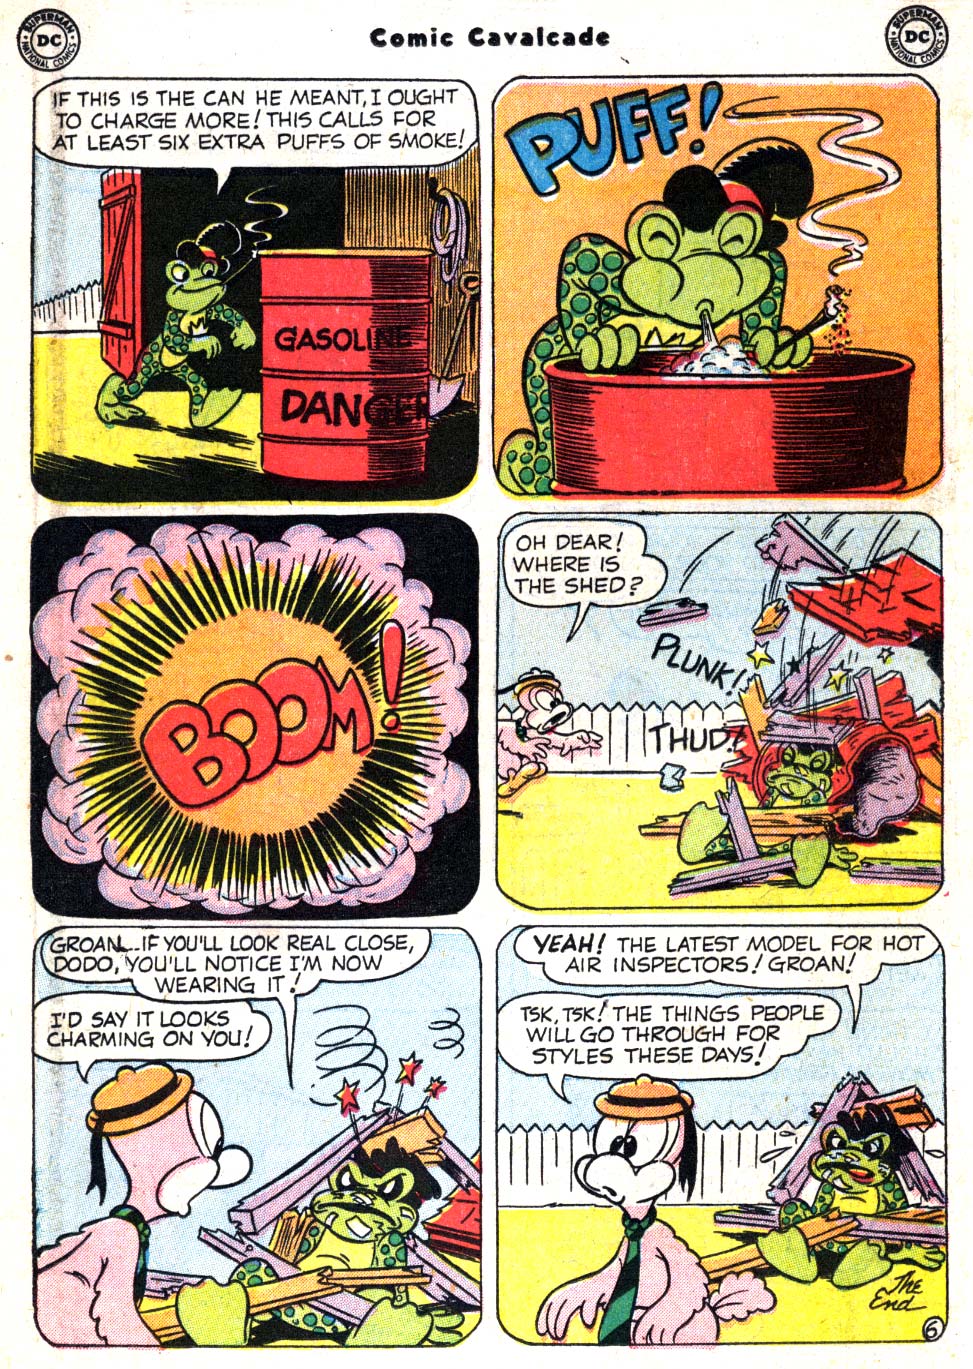 Comic Cavalcade issue 46 - Page 38